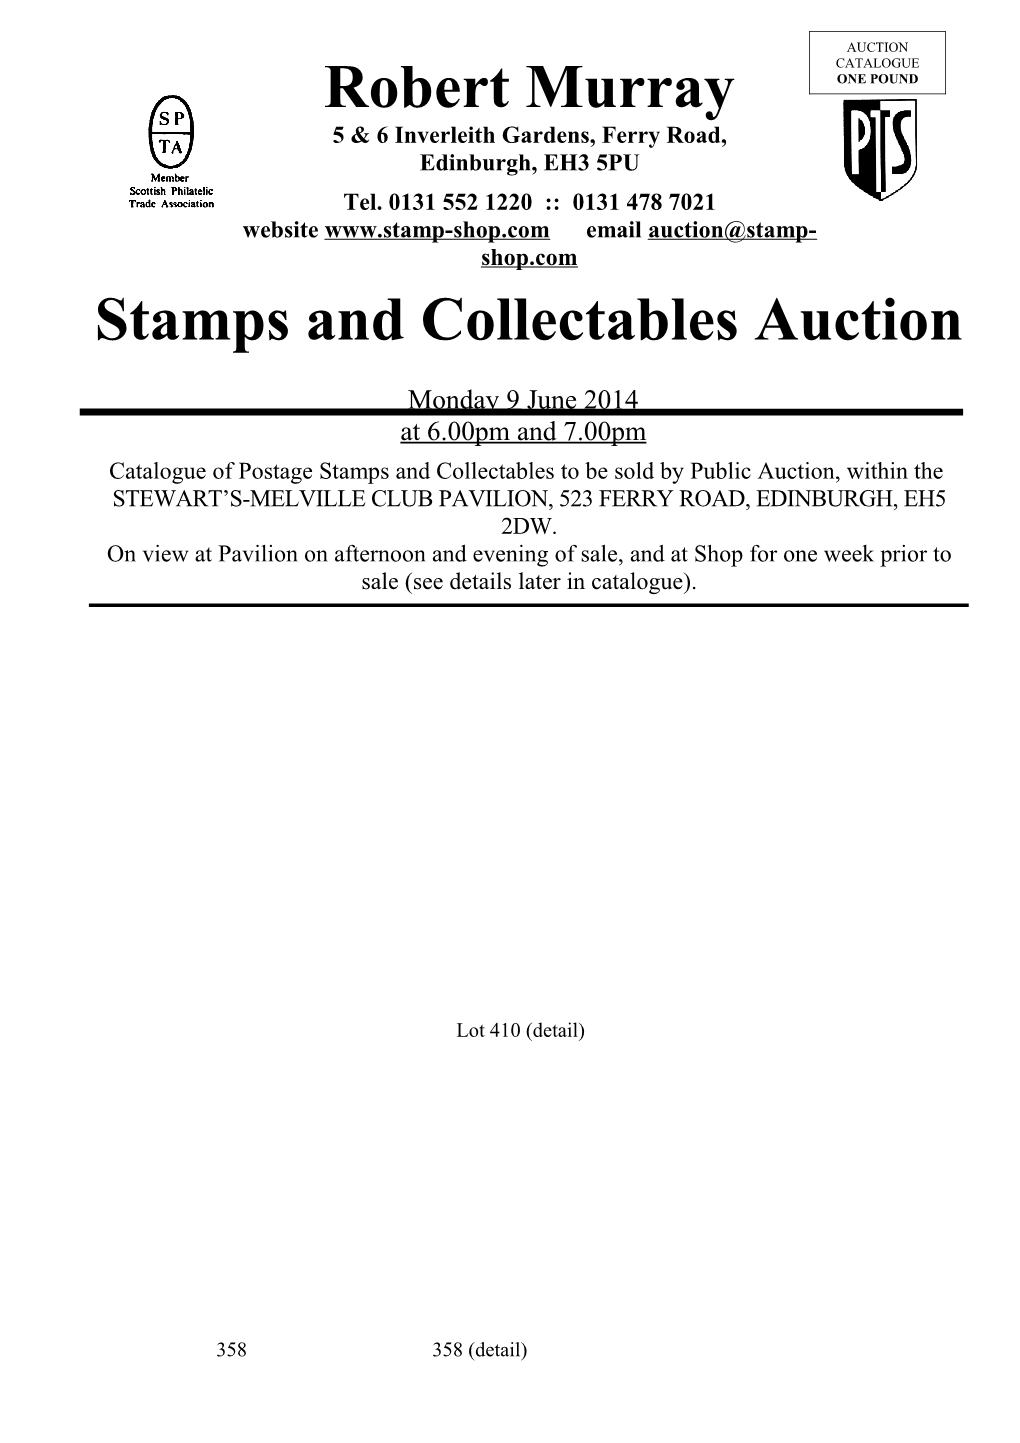 Robert Murray Stamp Auction s1